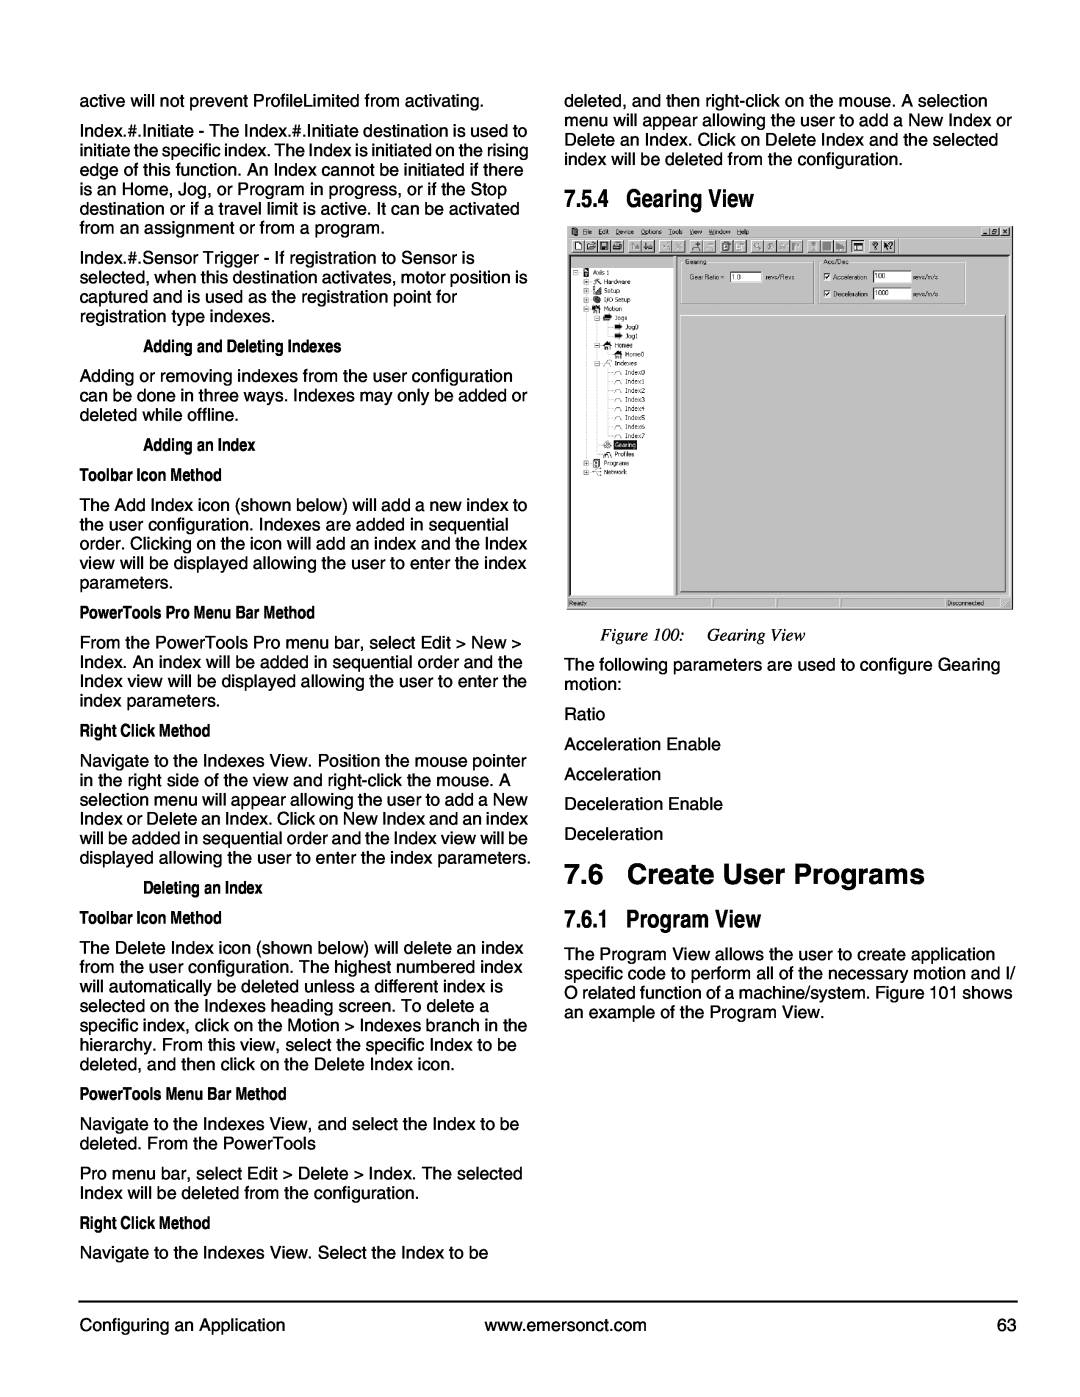 Emerson P/N 400361-00 manual Create User Programs, Gearing View, Program View 